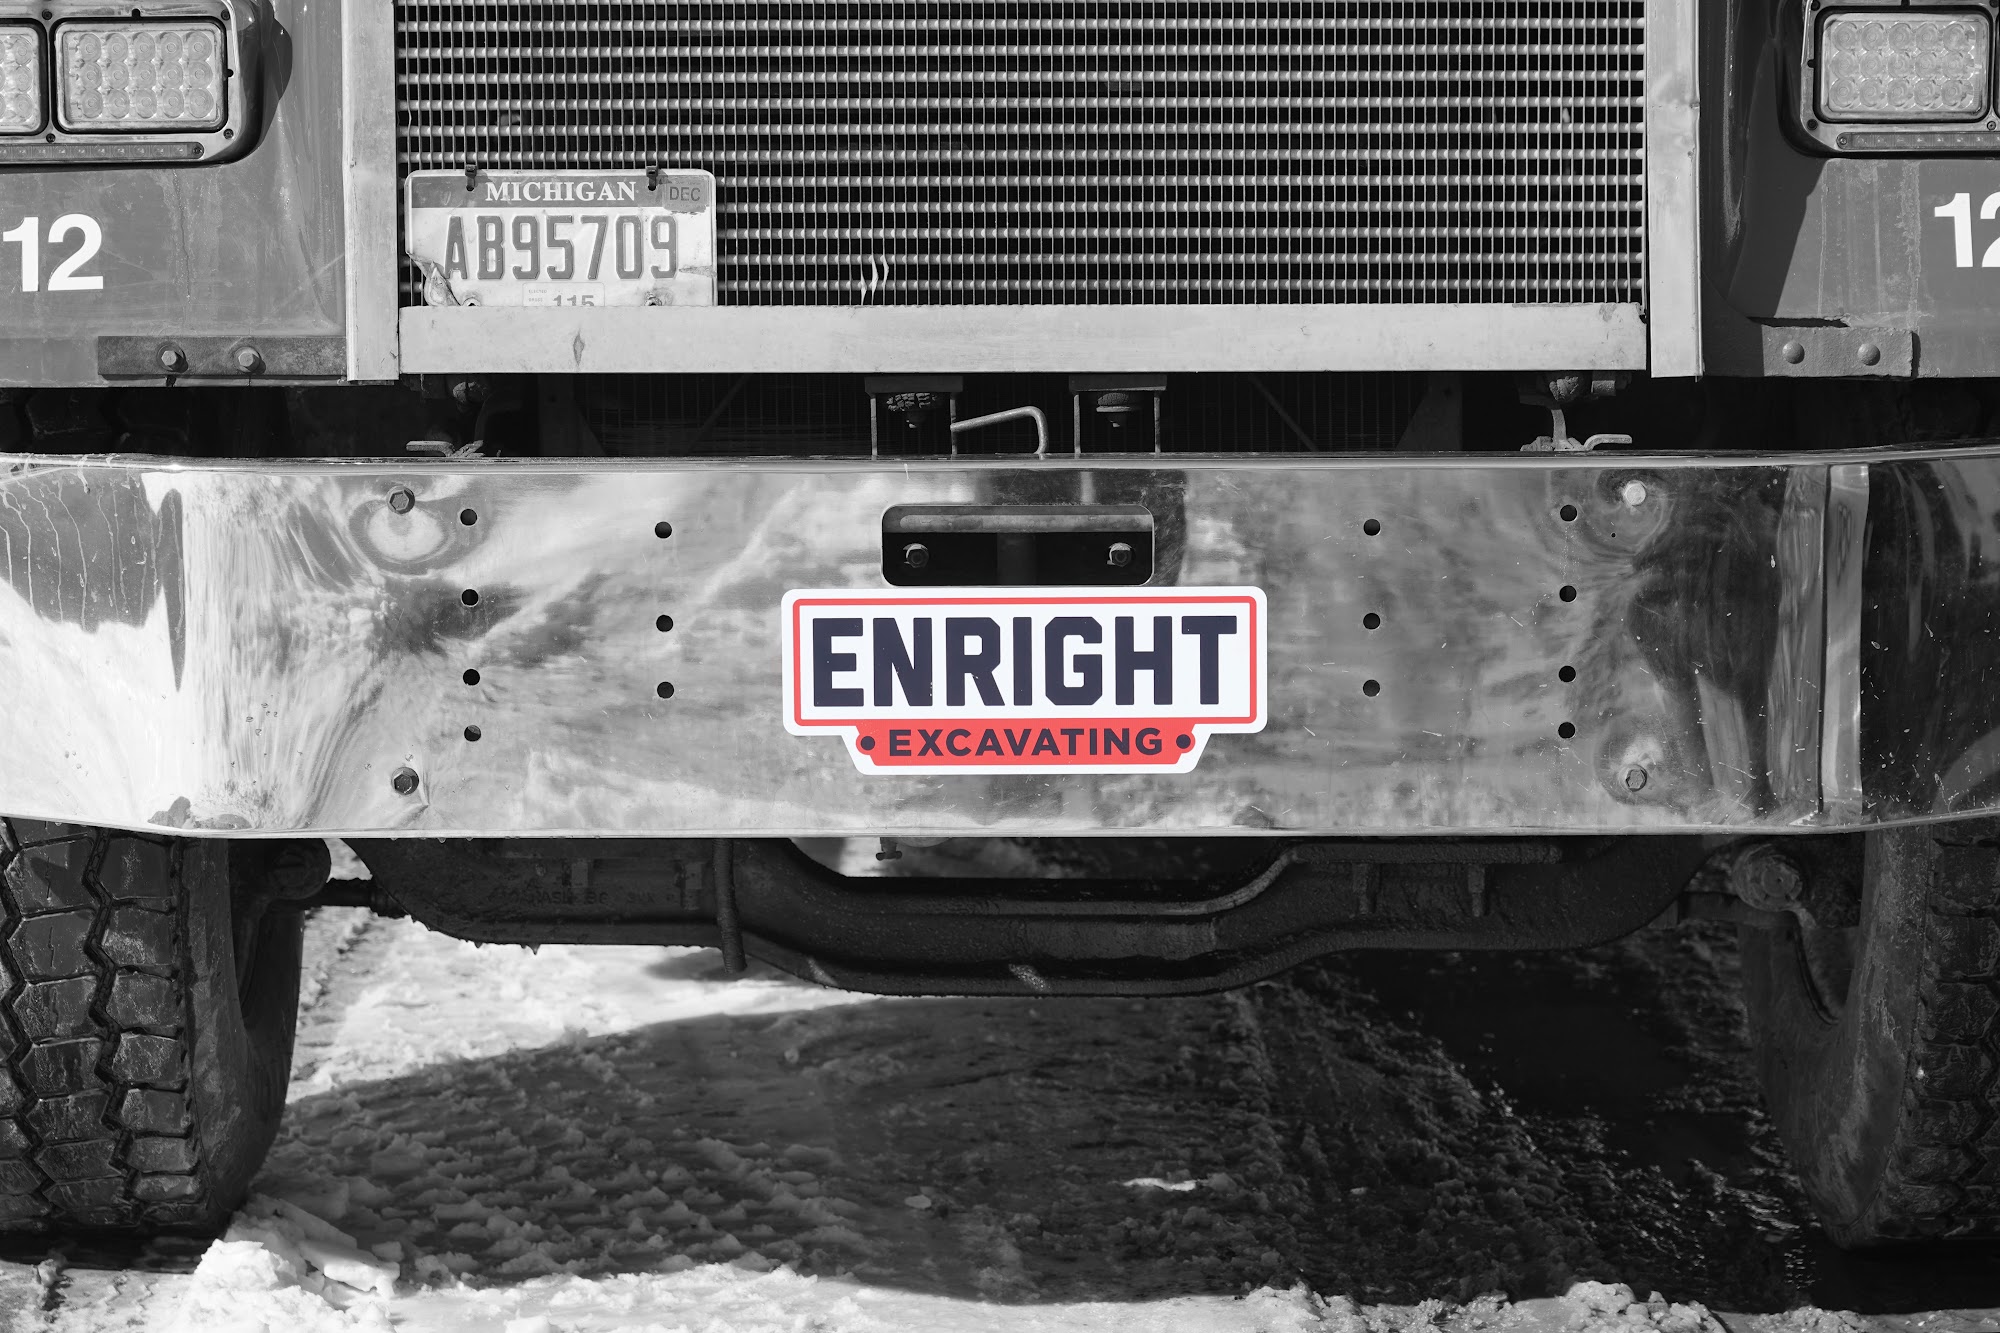 Enright Excavating 327 US-41, Negaunee Michigan 49866